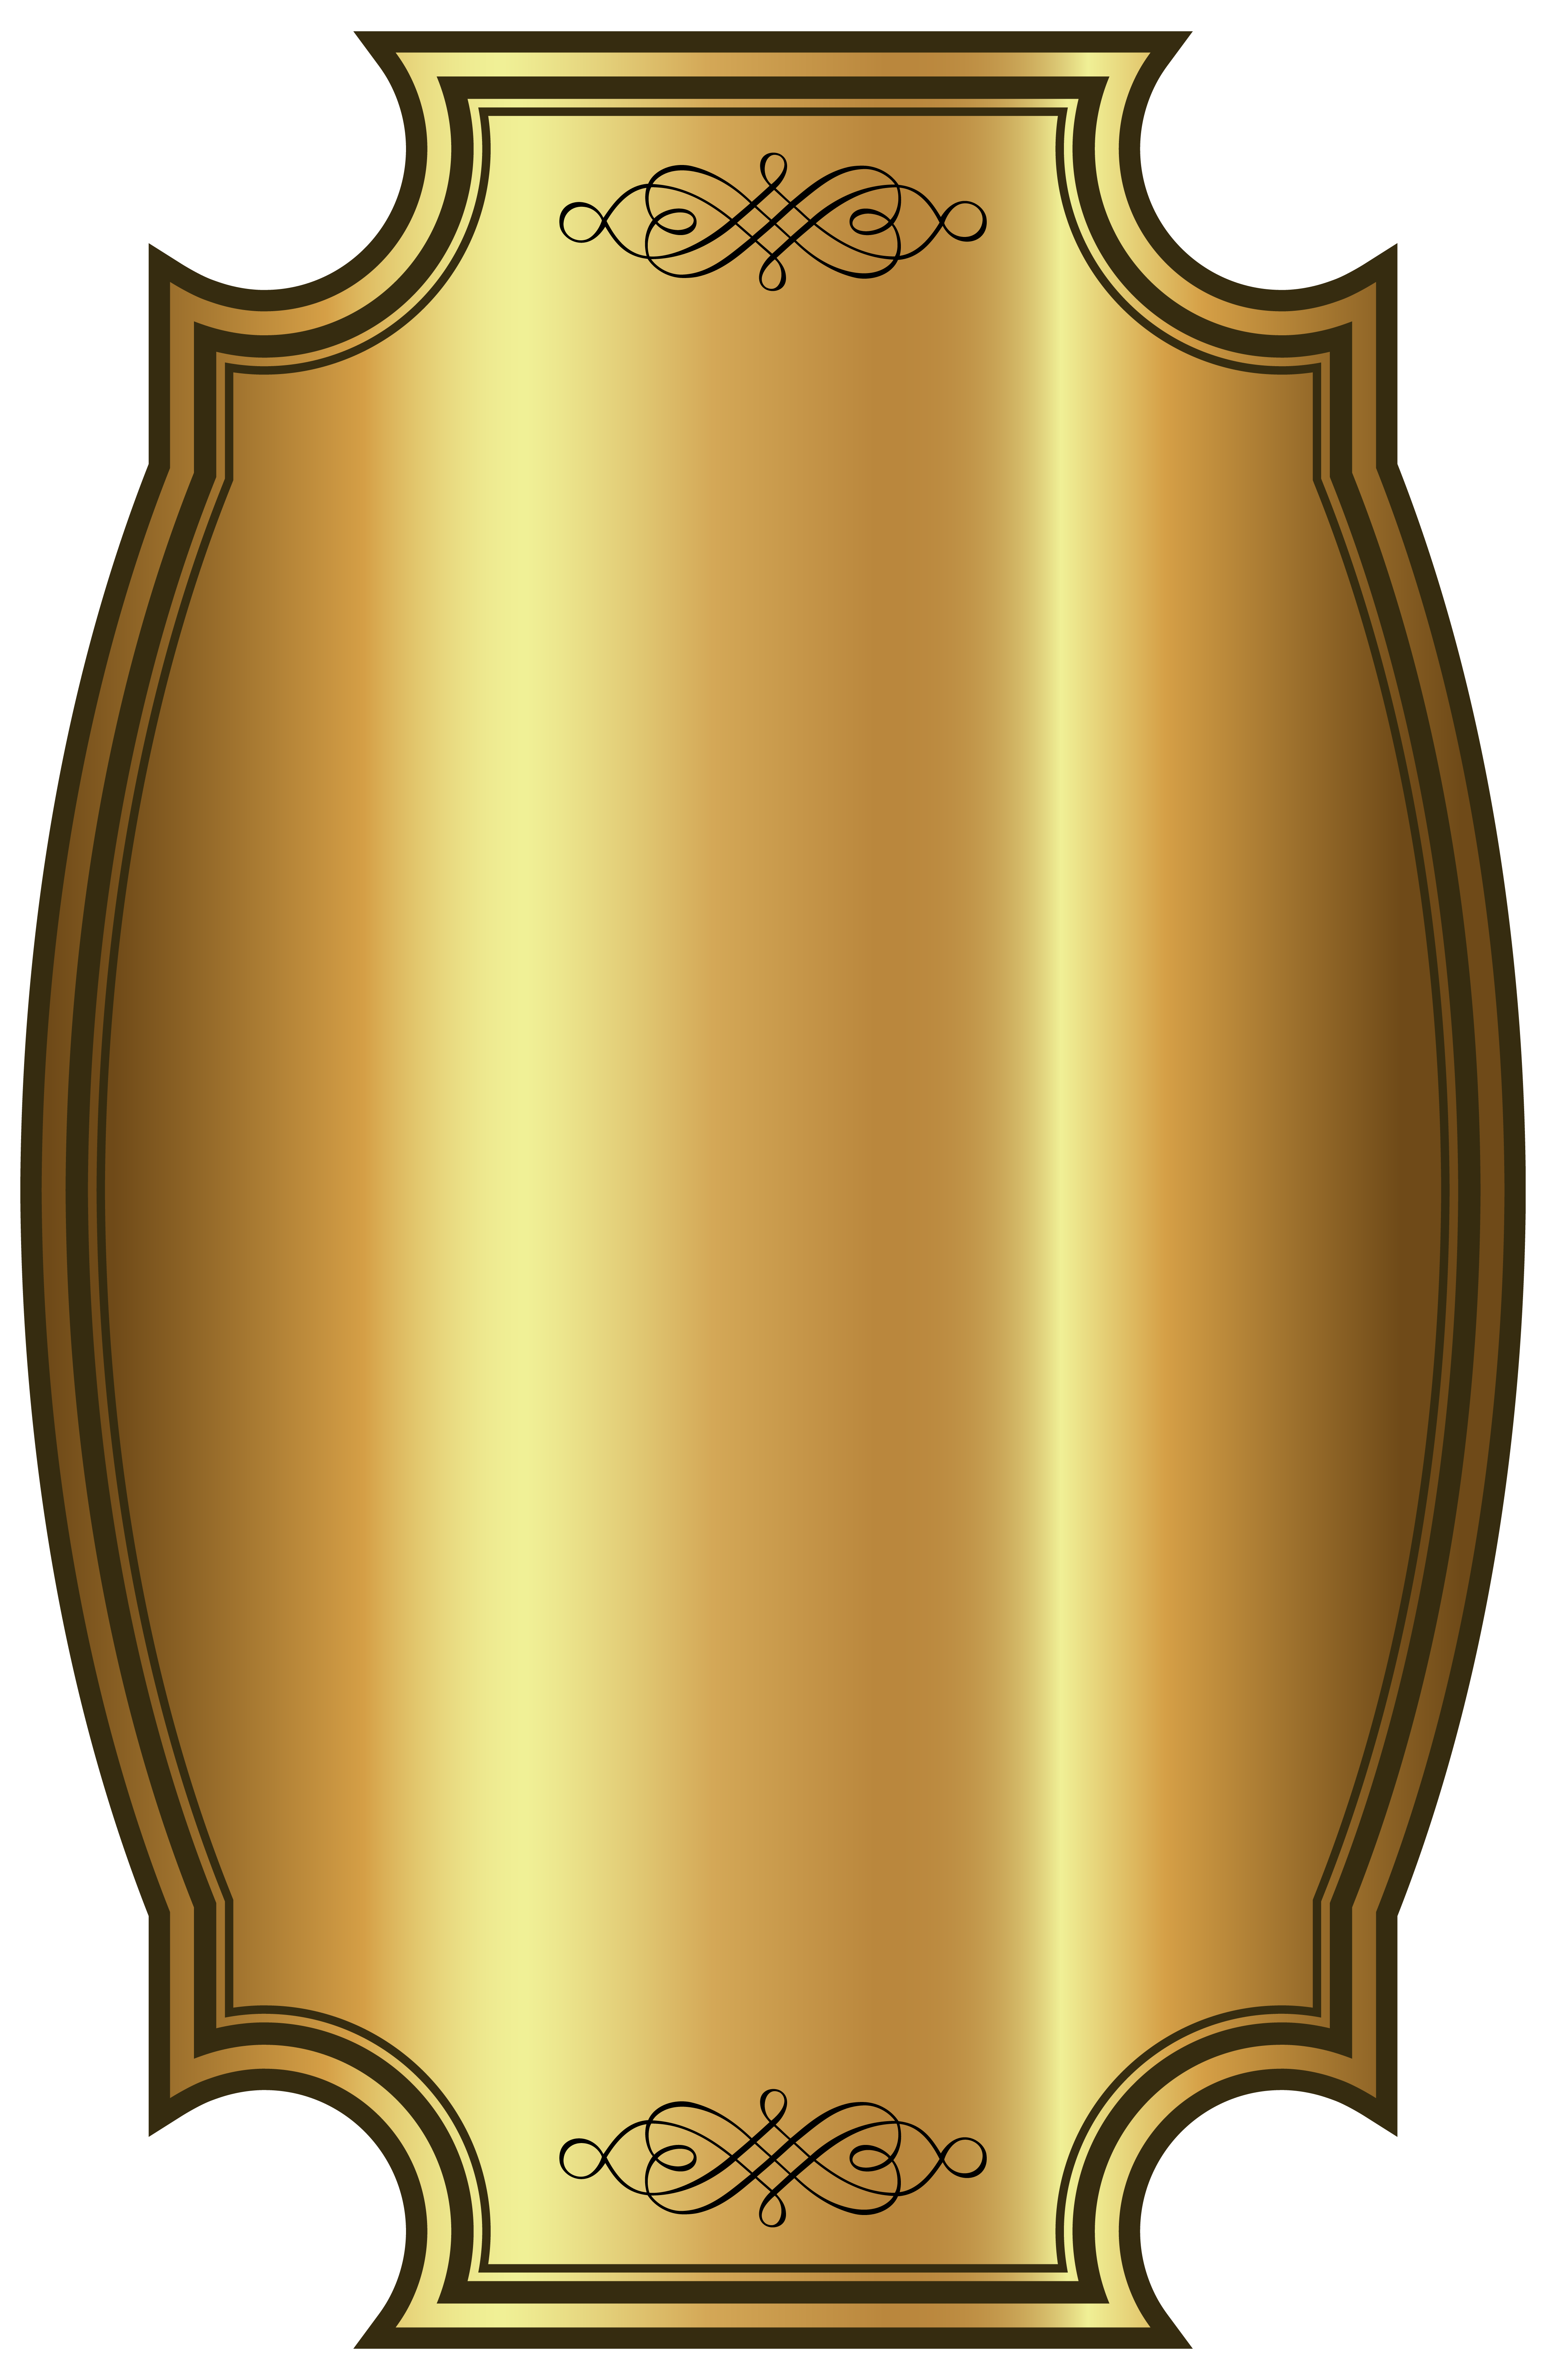 Luxury gold label template. Clipart shield metallic